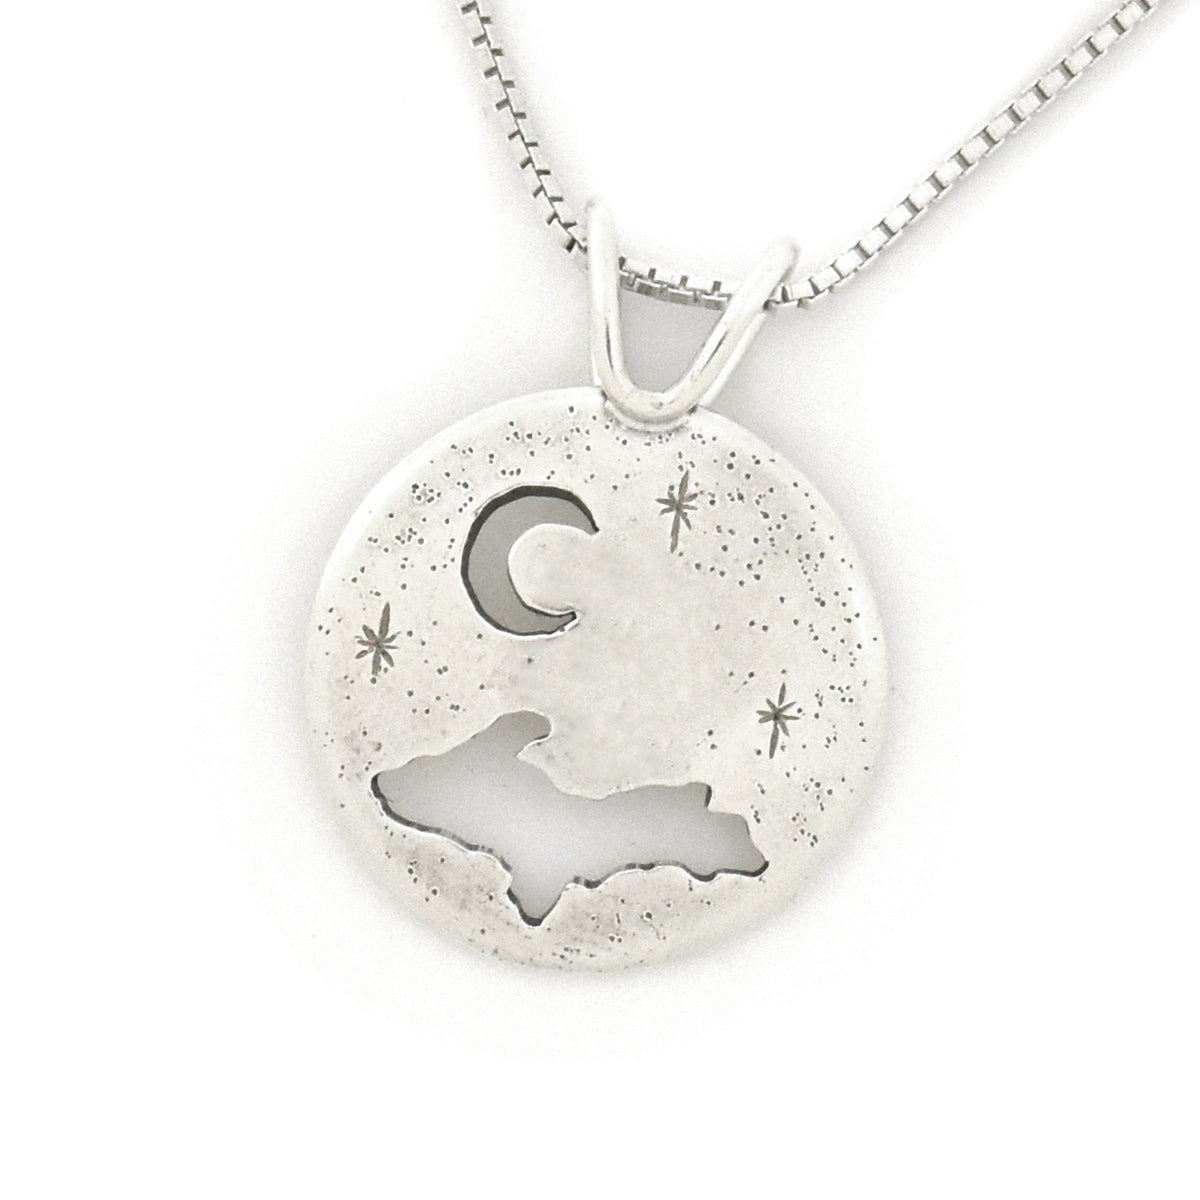 Silver Night Sky Upper Peninsula Pendant - Silver Pendant   7081 - handmade by Beth Millner Jewelry